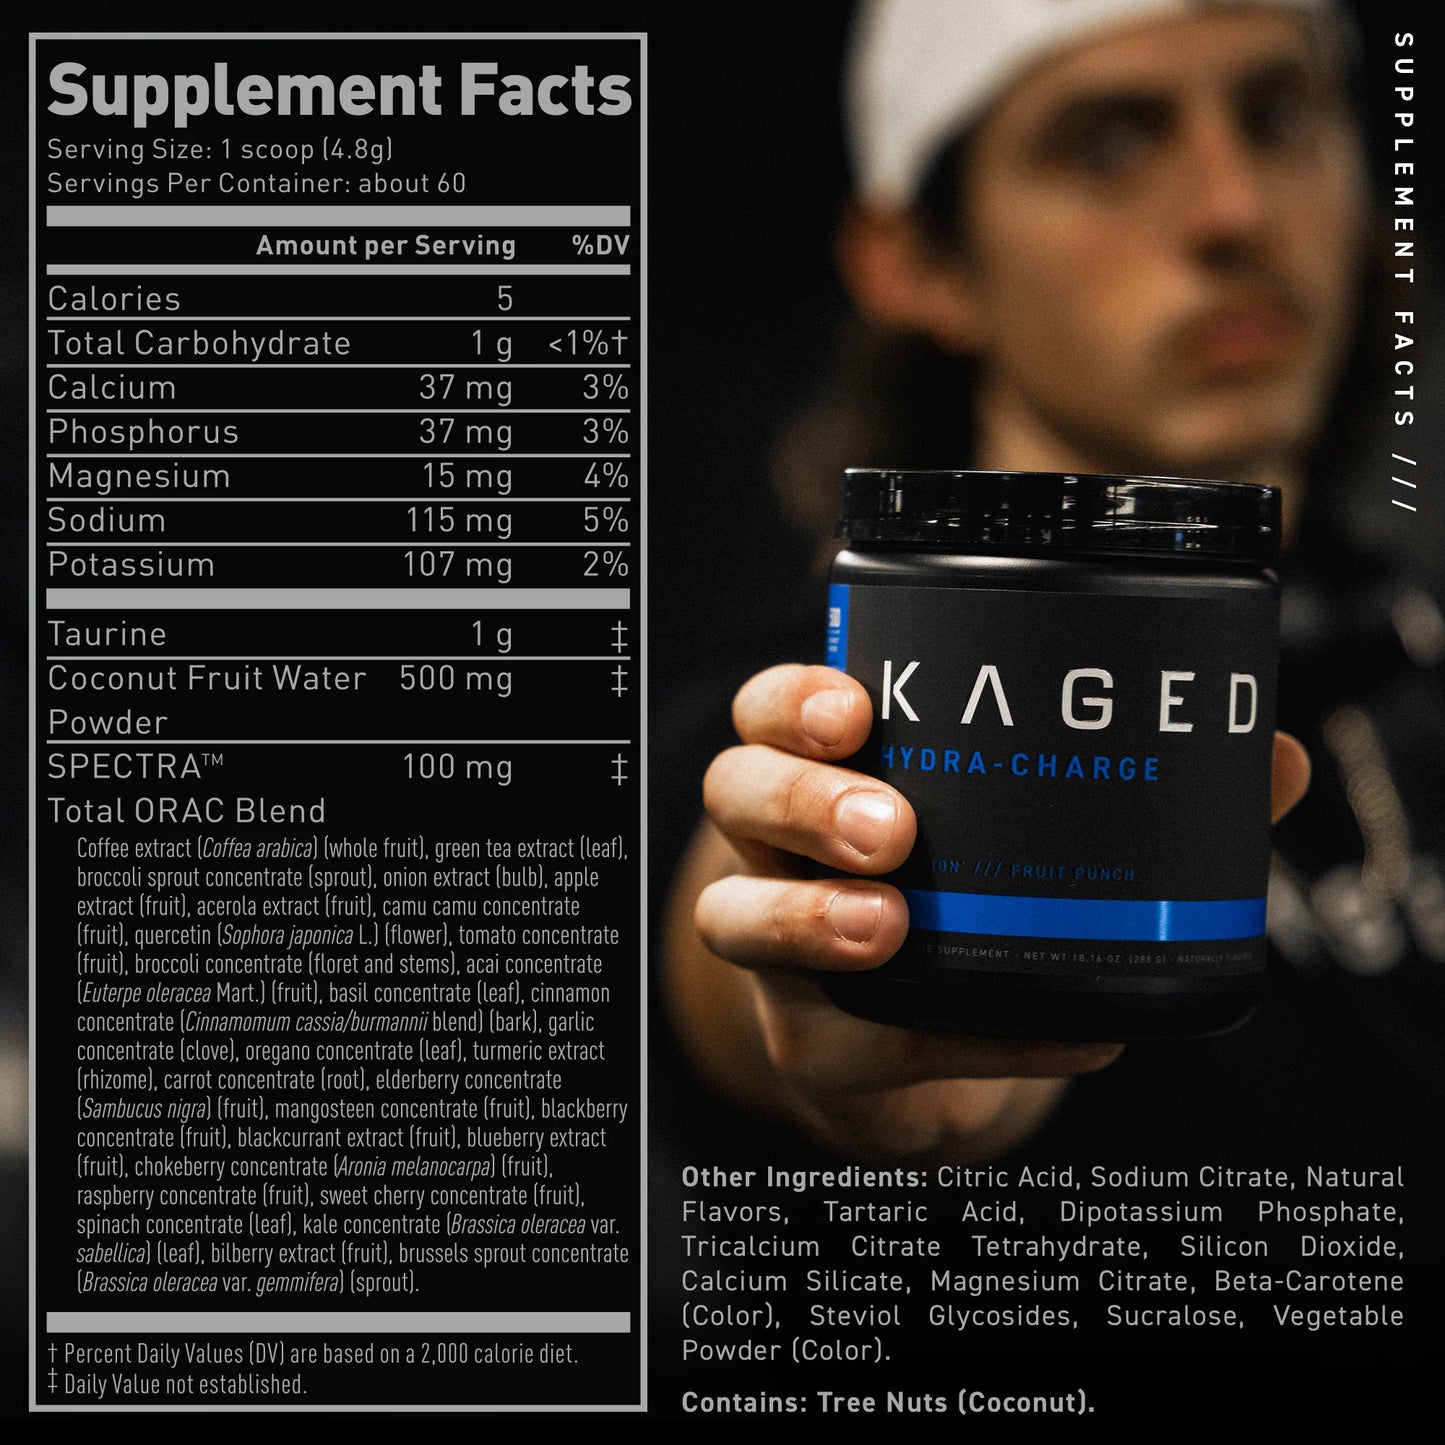 KAGED Hydra-charge Hydration Powder